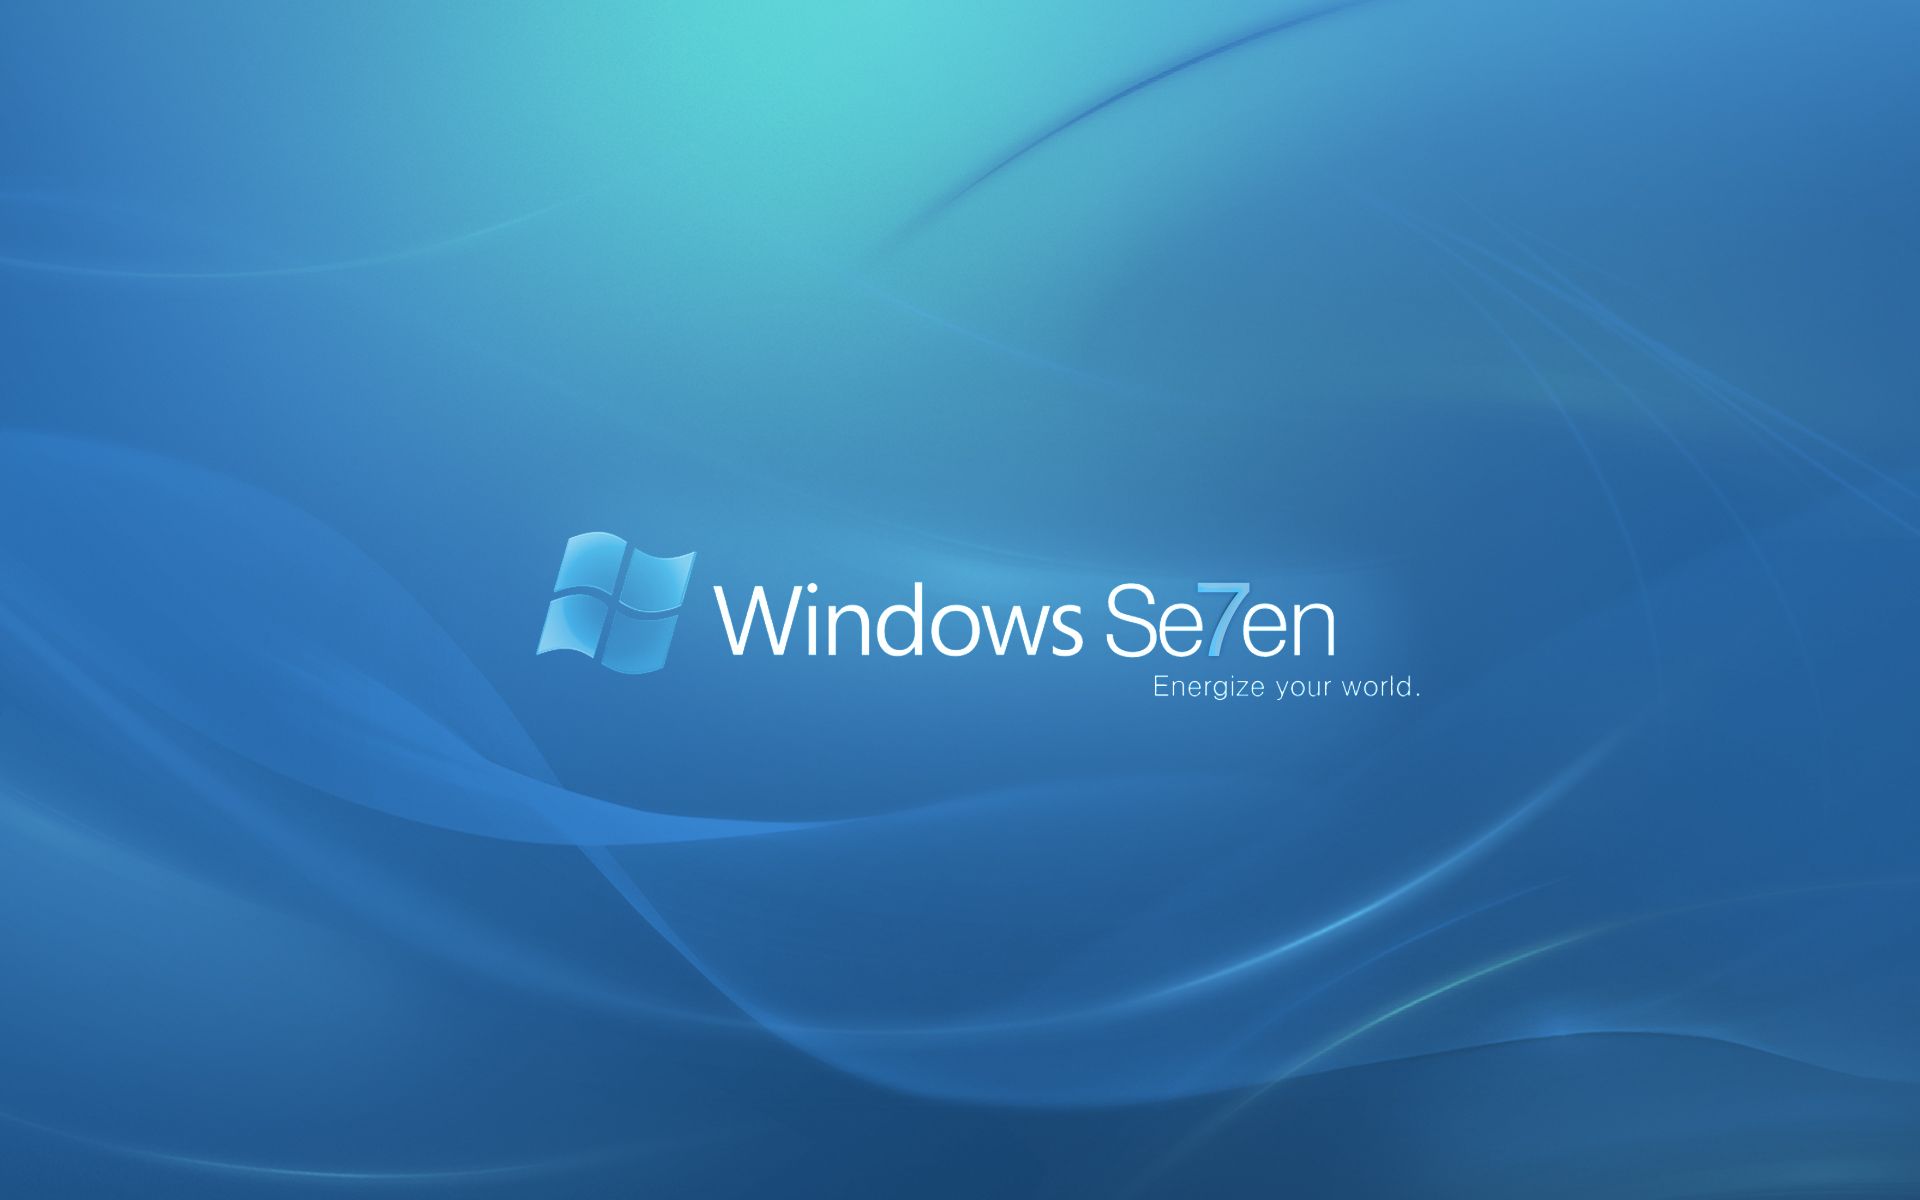 Windows 7 life. Виндовс 7. Windows 7 рабочий стол. Обои Windows 7. Обои Windows 7 professional.